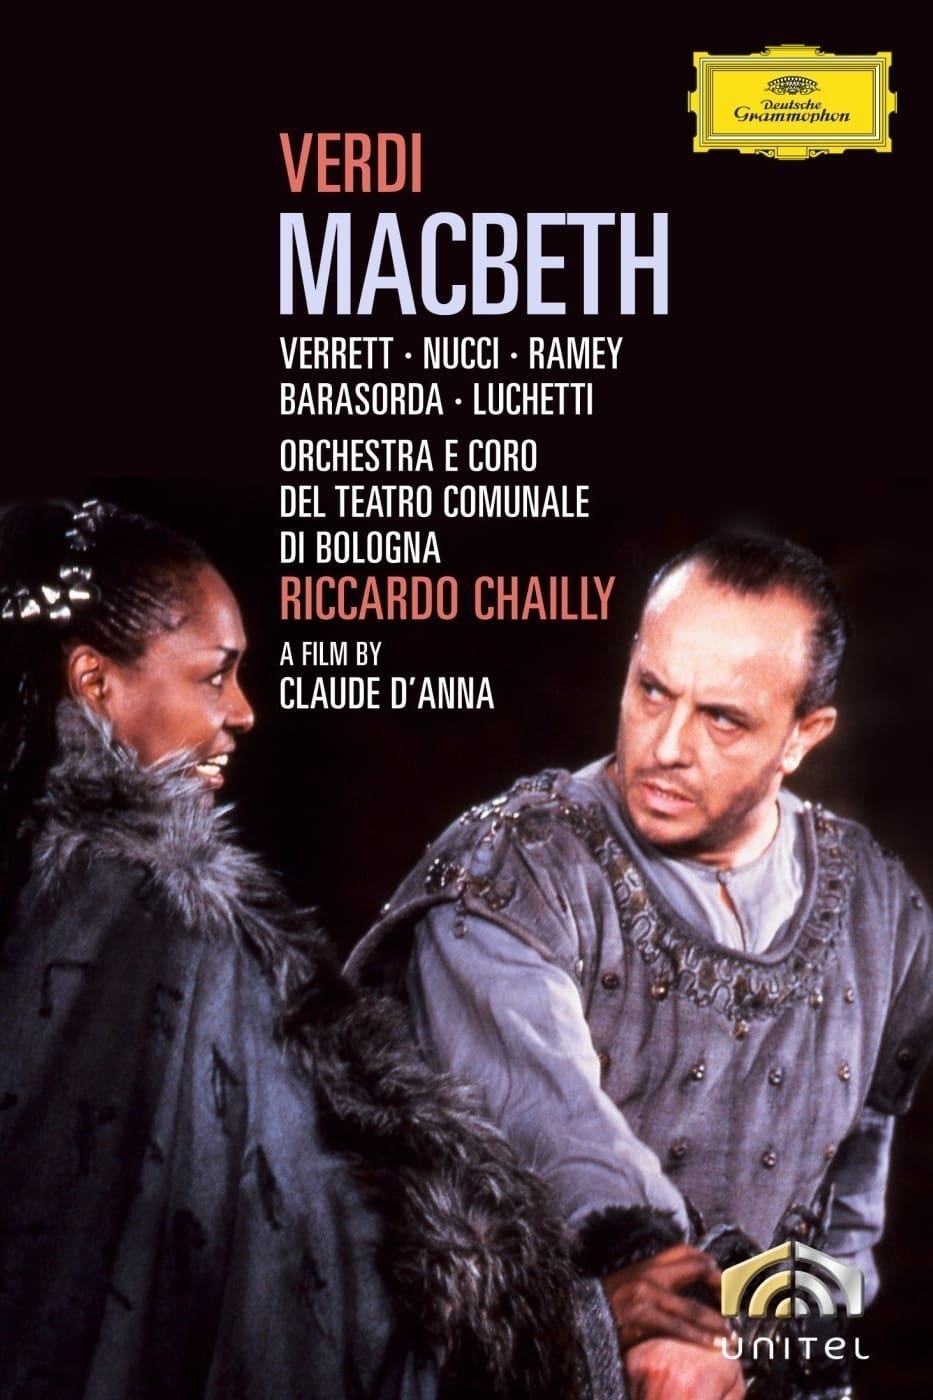 Verdi Macbeth Chailly (1987)